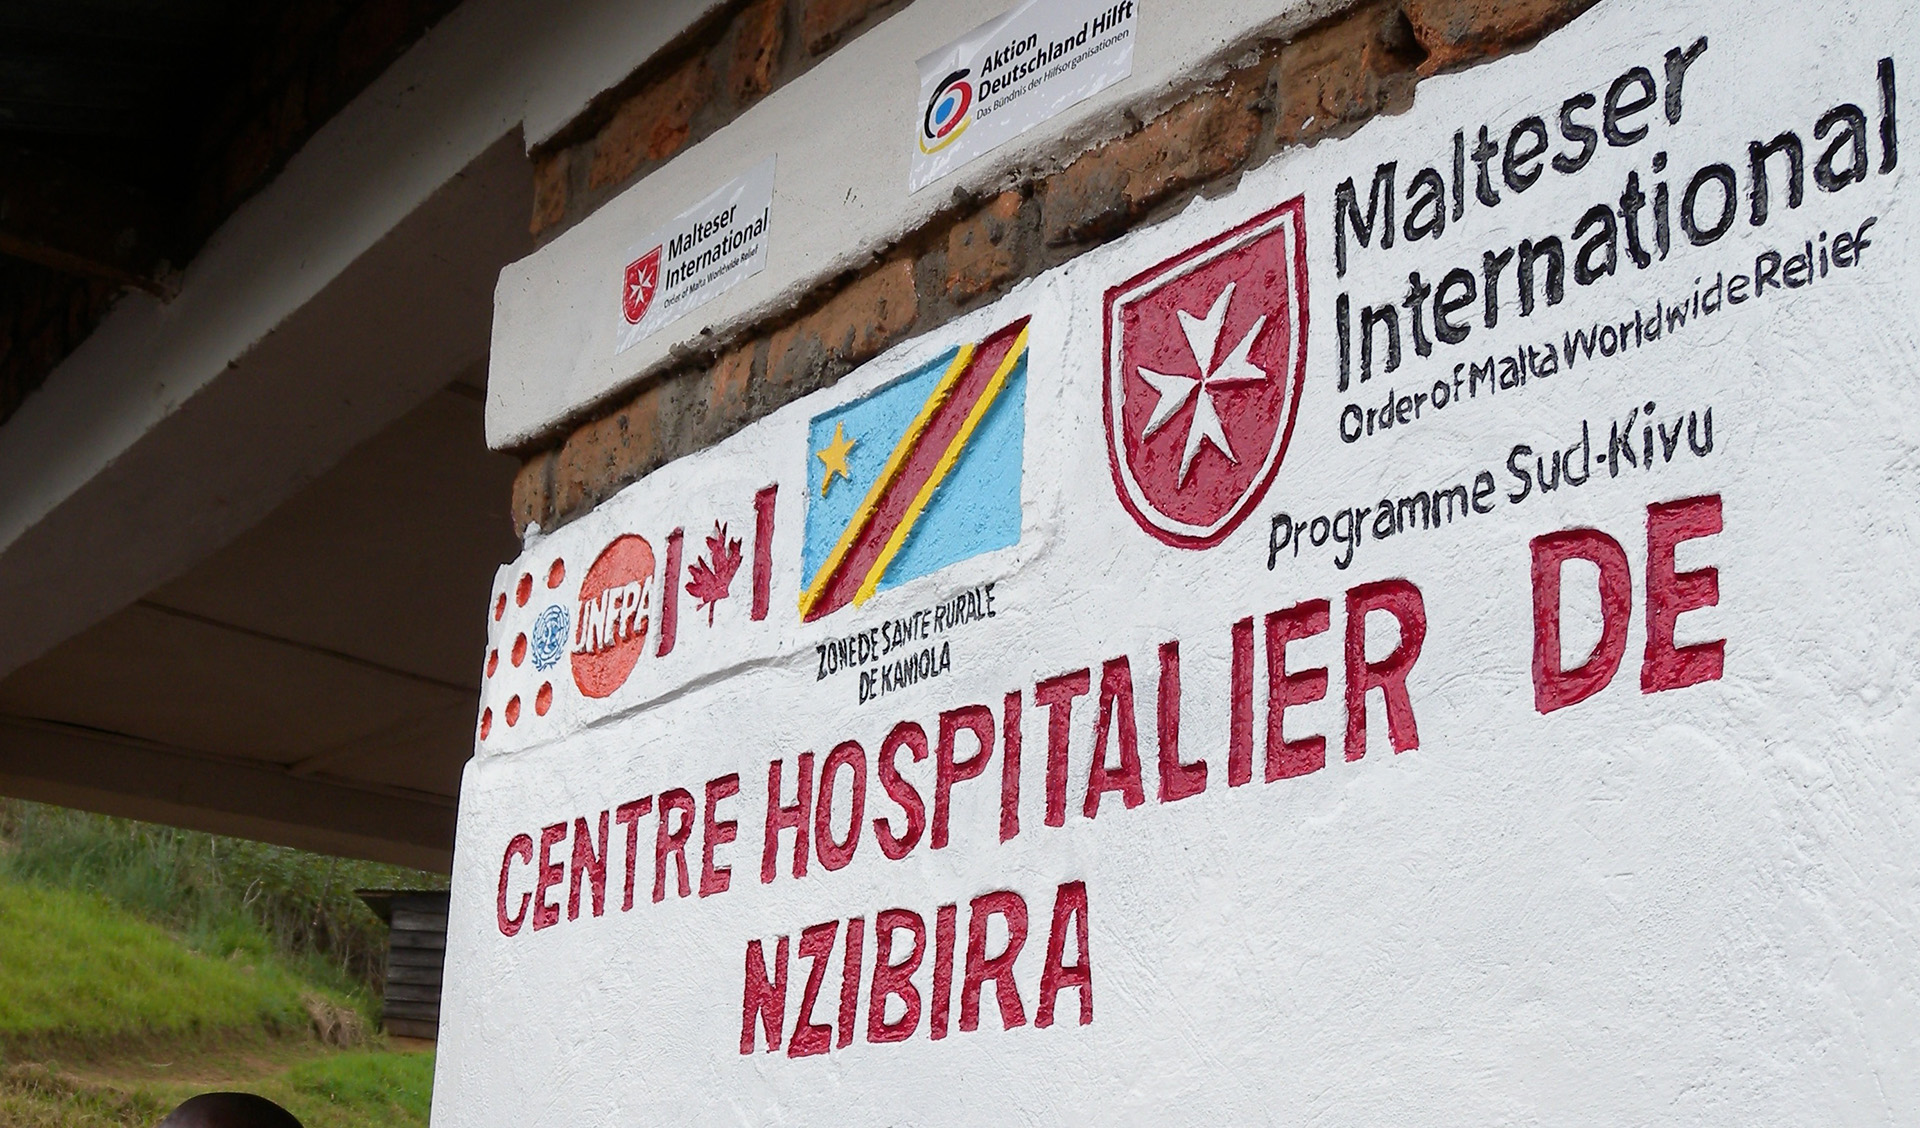 New hospital centre in Nzibira